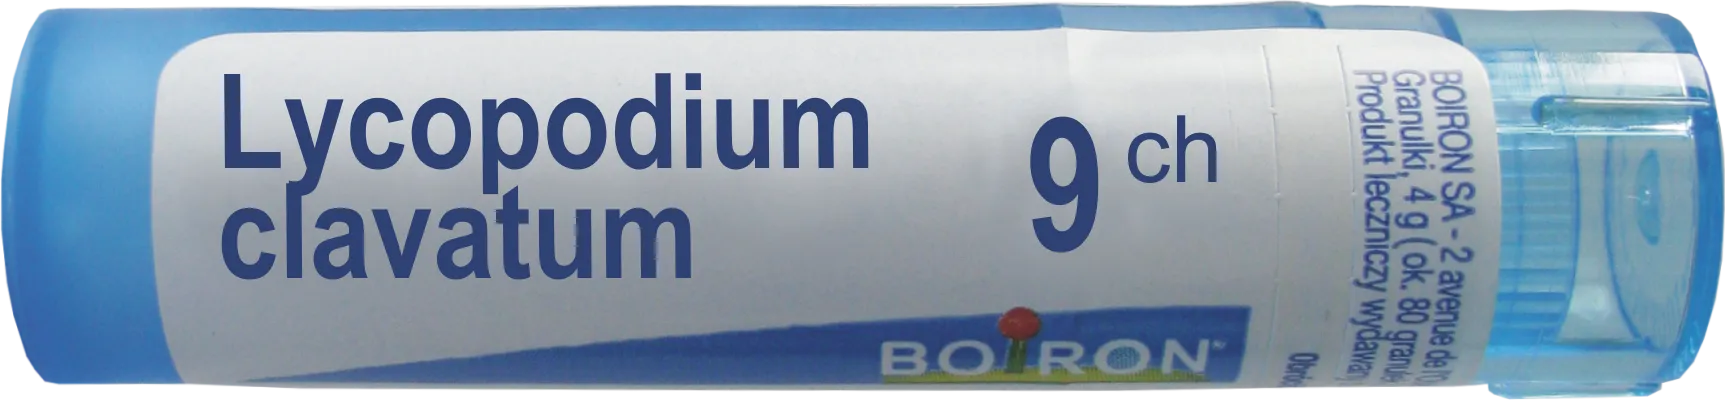 Boiron Lycopodium clavatum 9 CH, granulki, 4 g